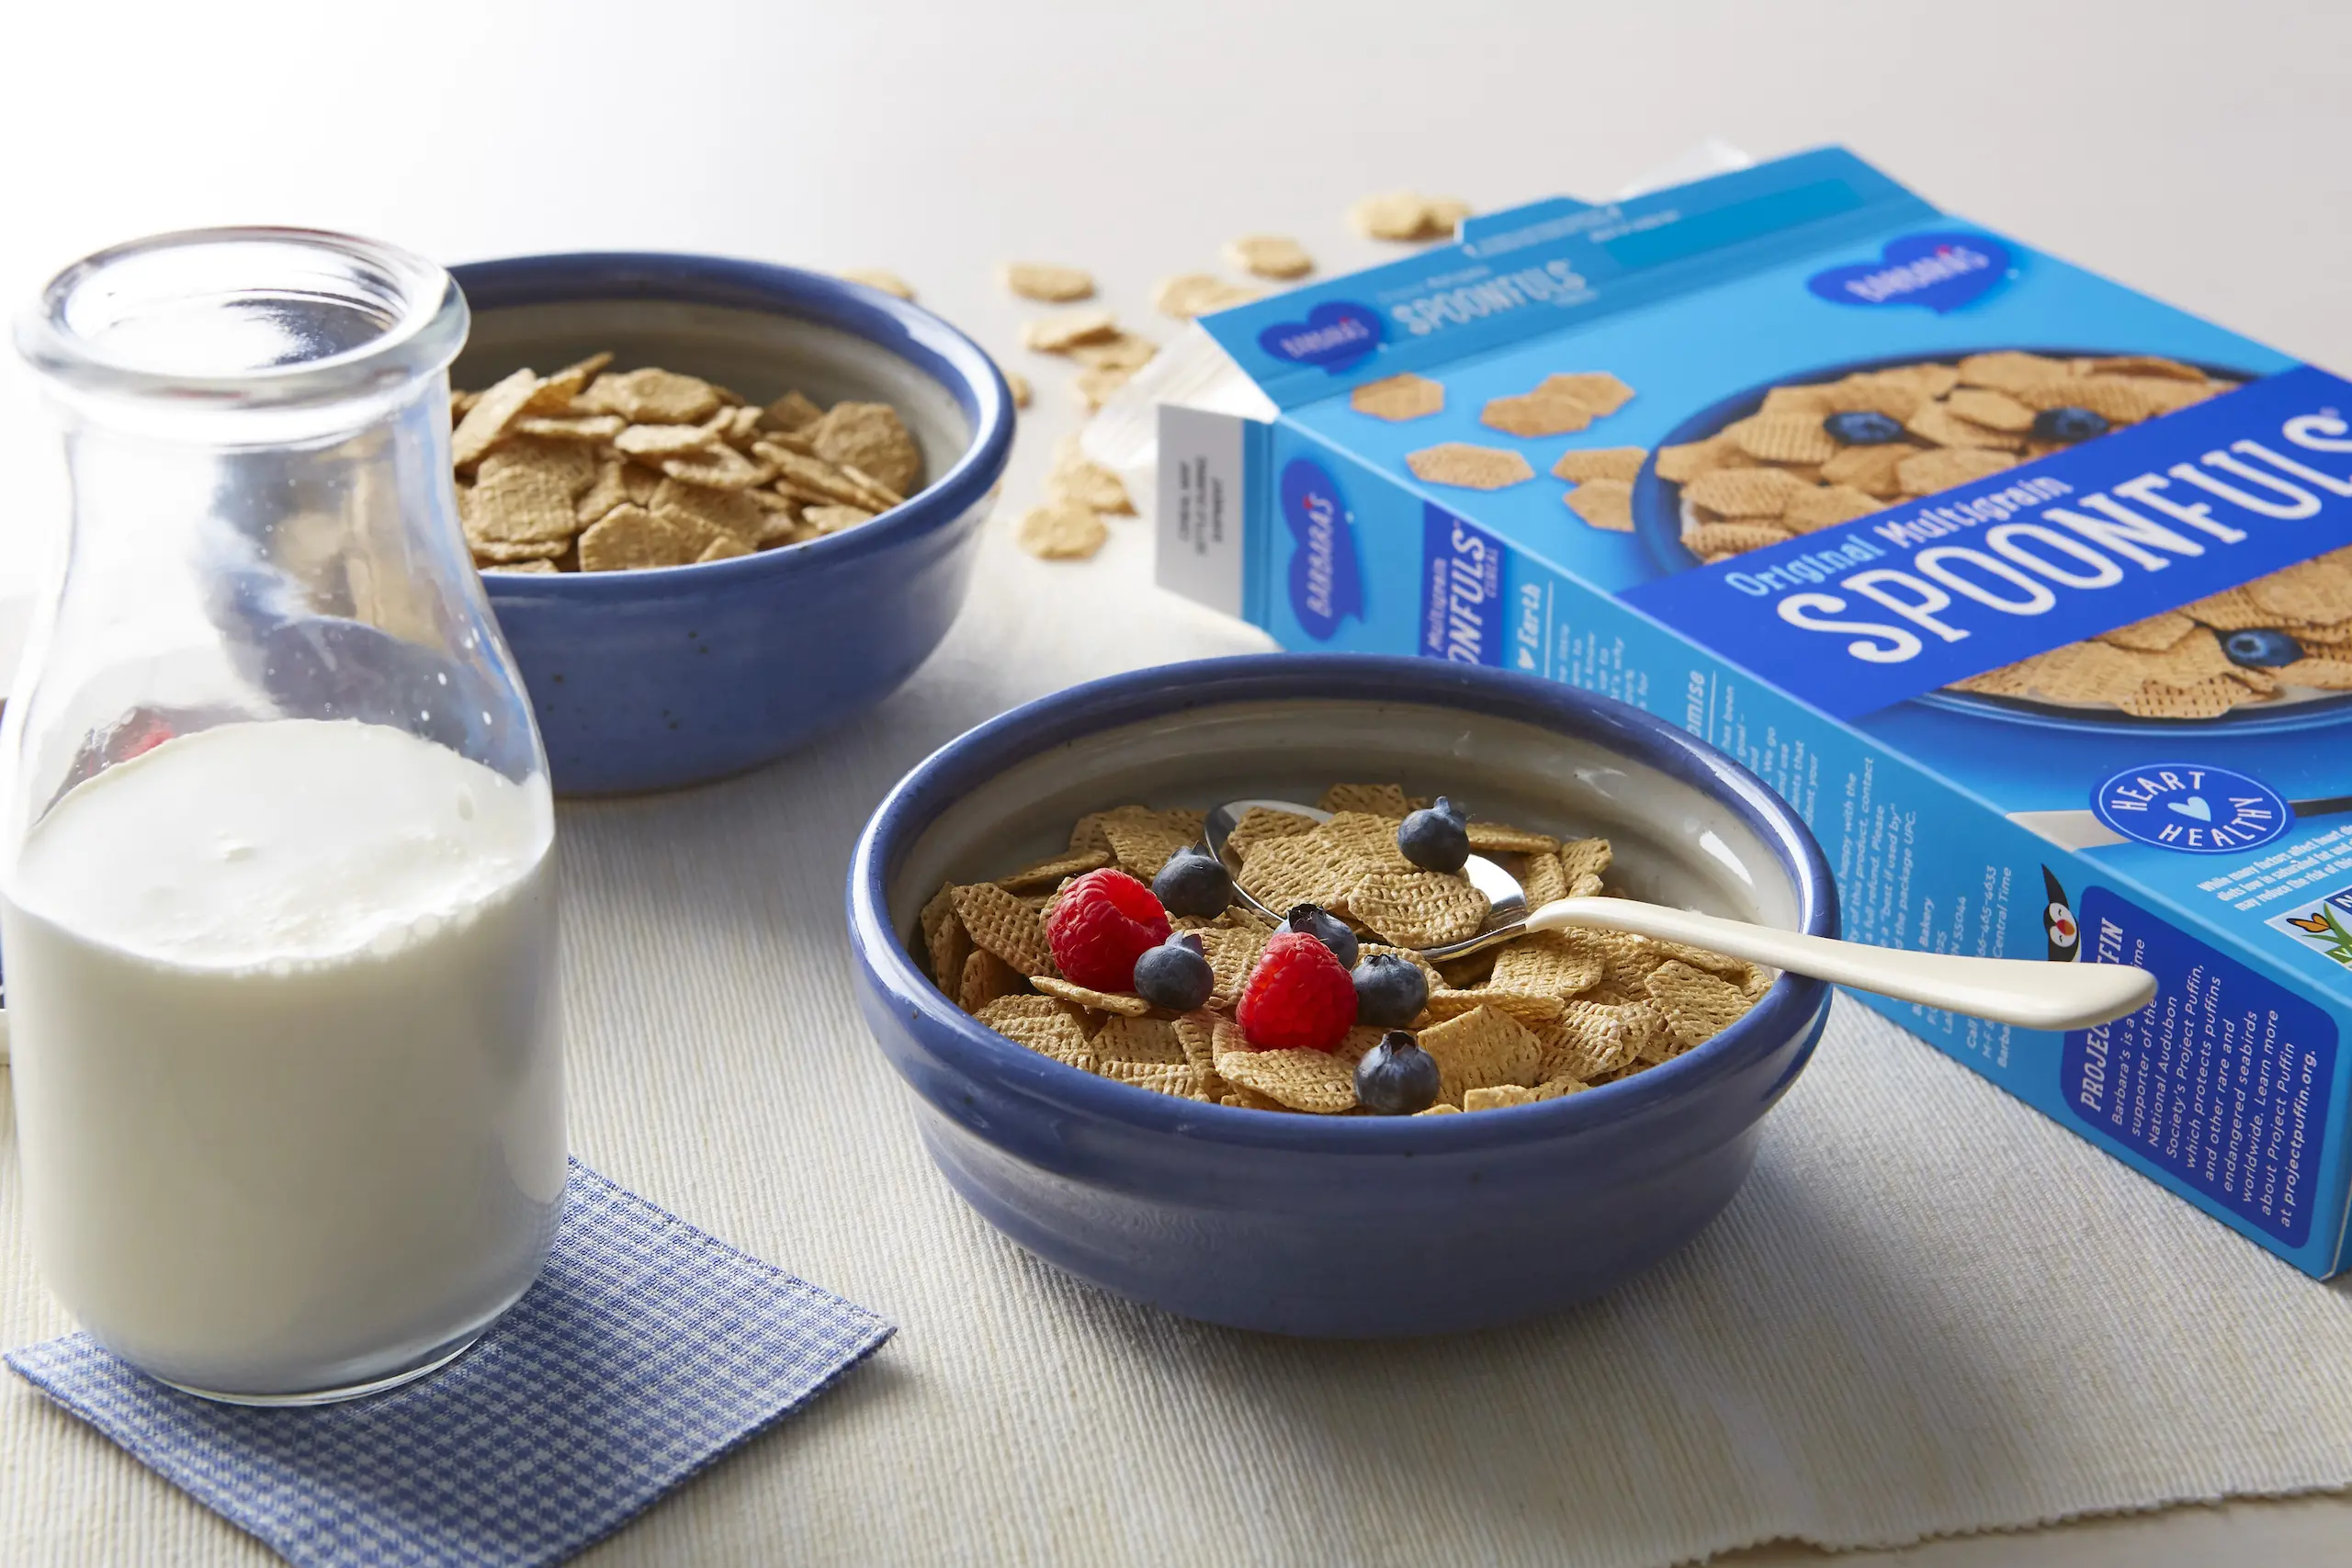 Barbara's Original Multigrain Spoonfuls cereal box and bowl next to glass of milk